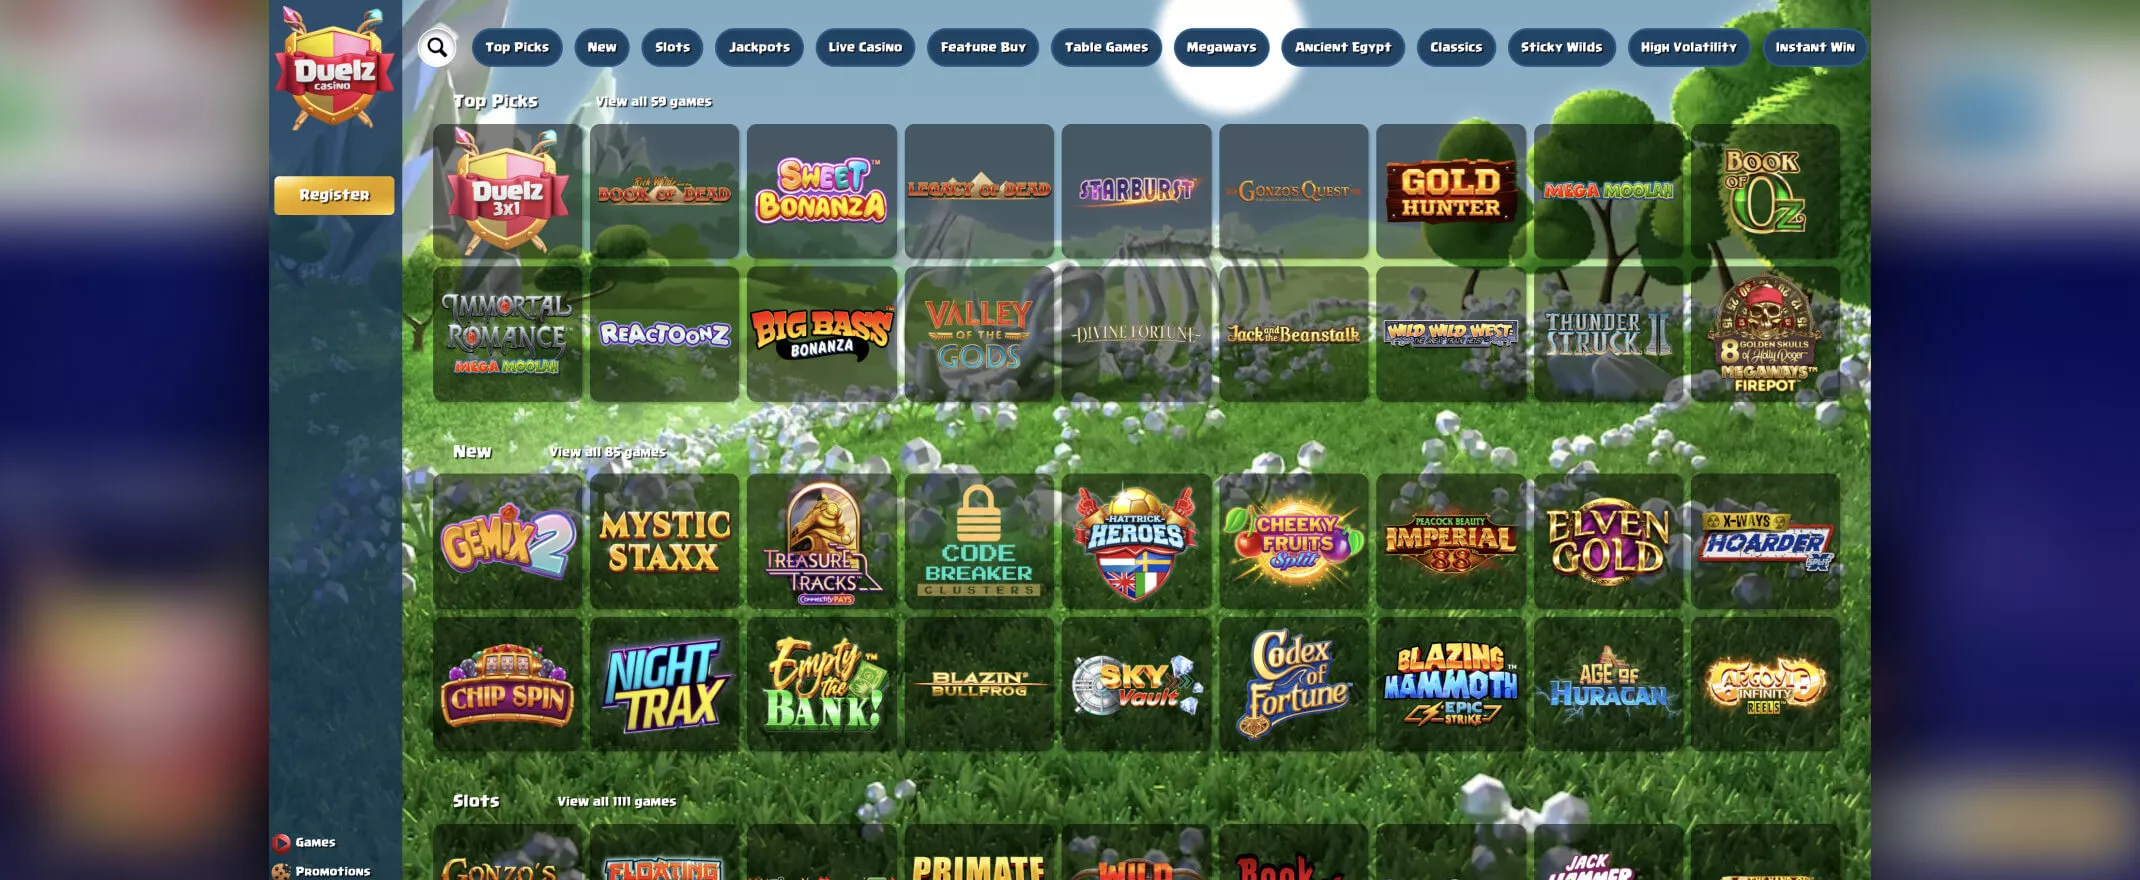 Duelz Casino screenshot of the games